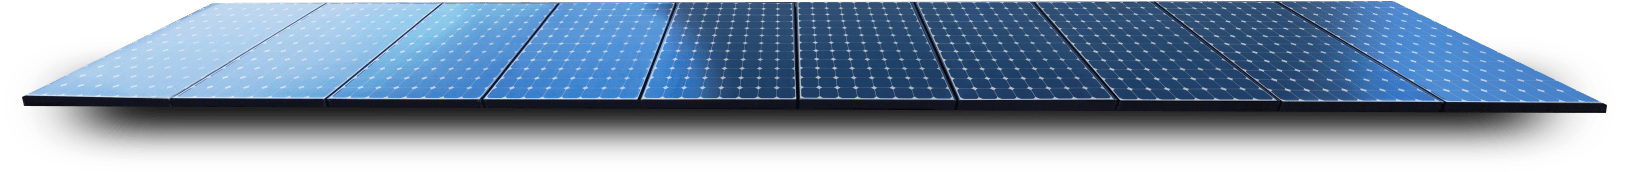 Solar Energy Partners Charleston solar panel.